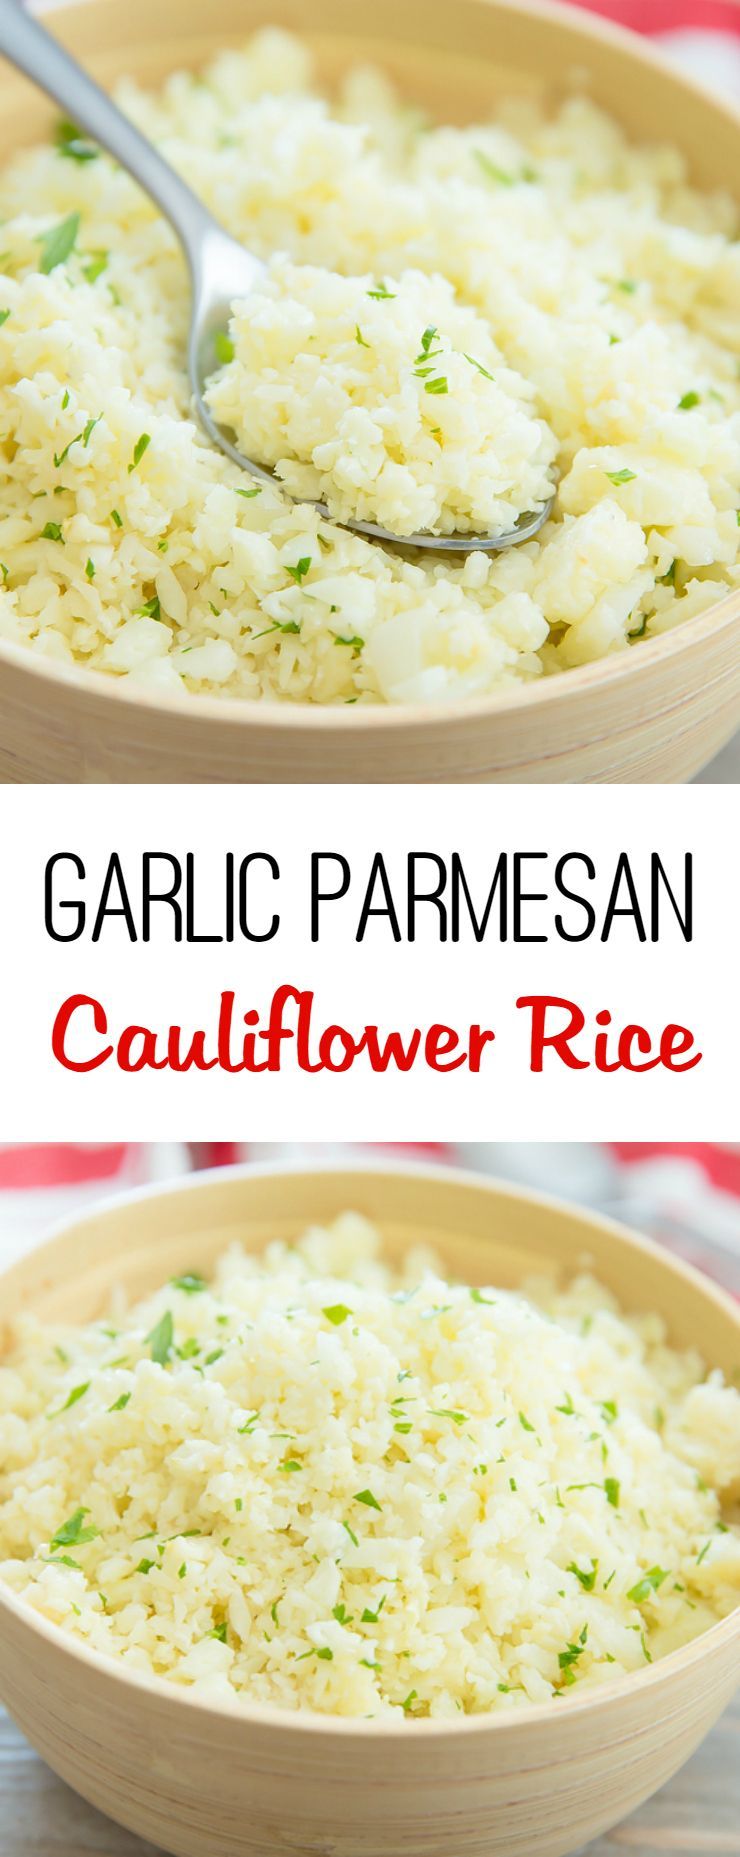 Garlic Parmesan Cauliflower Rice -   22 riced cauliflower recipes
 ideas